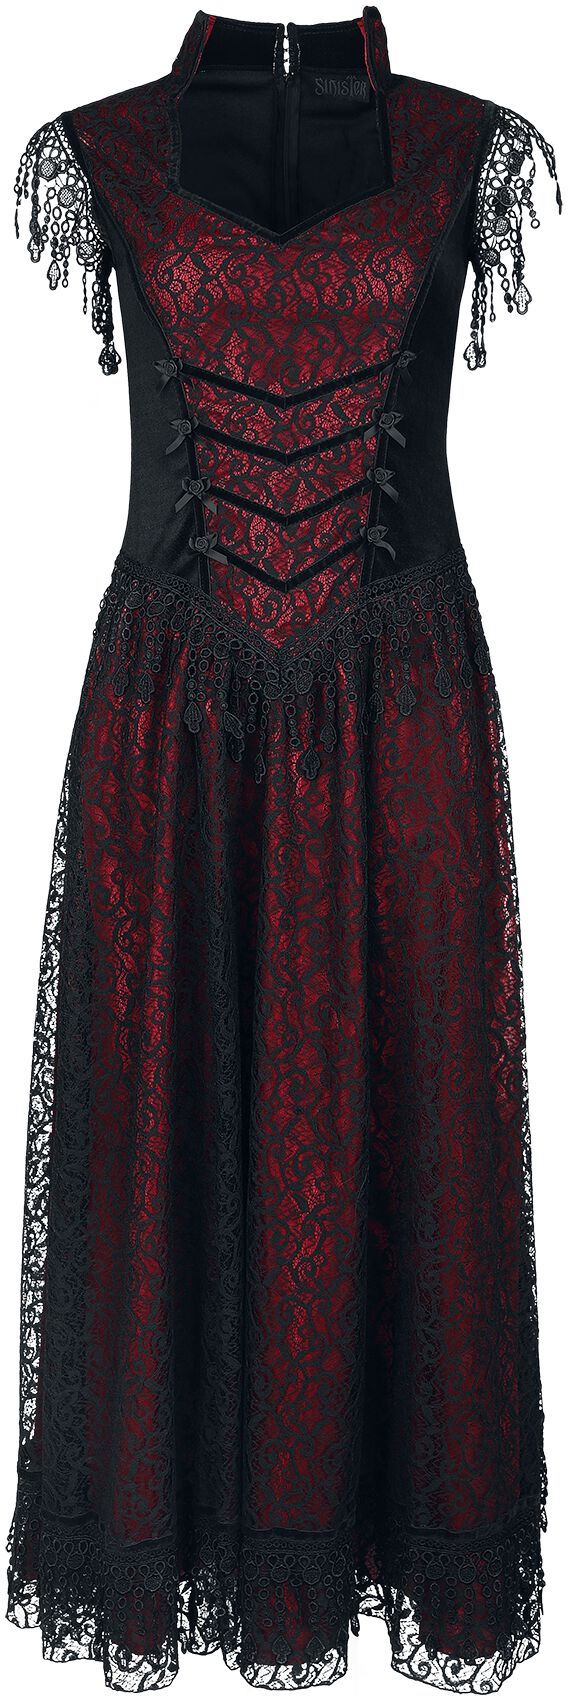 Image of Abito lungo Gothic di Sinister Gothic - Gothic Dress - S a XXL - Donna - nero/rosso